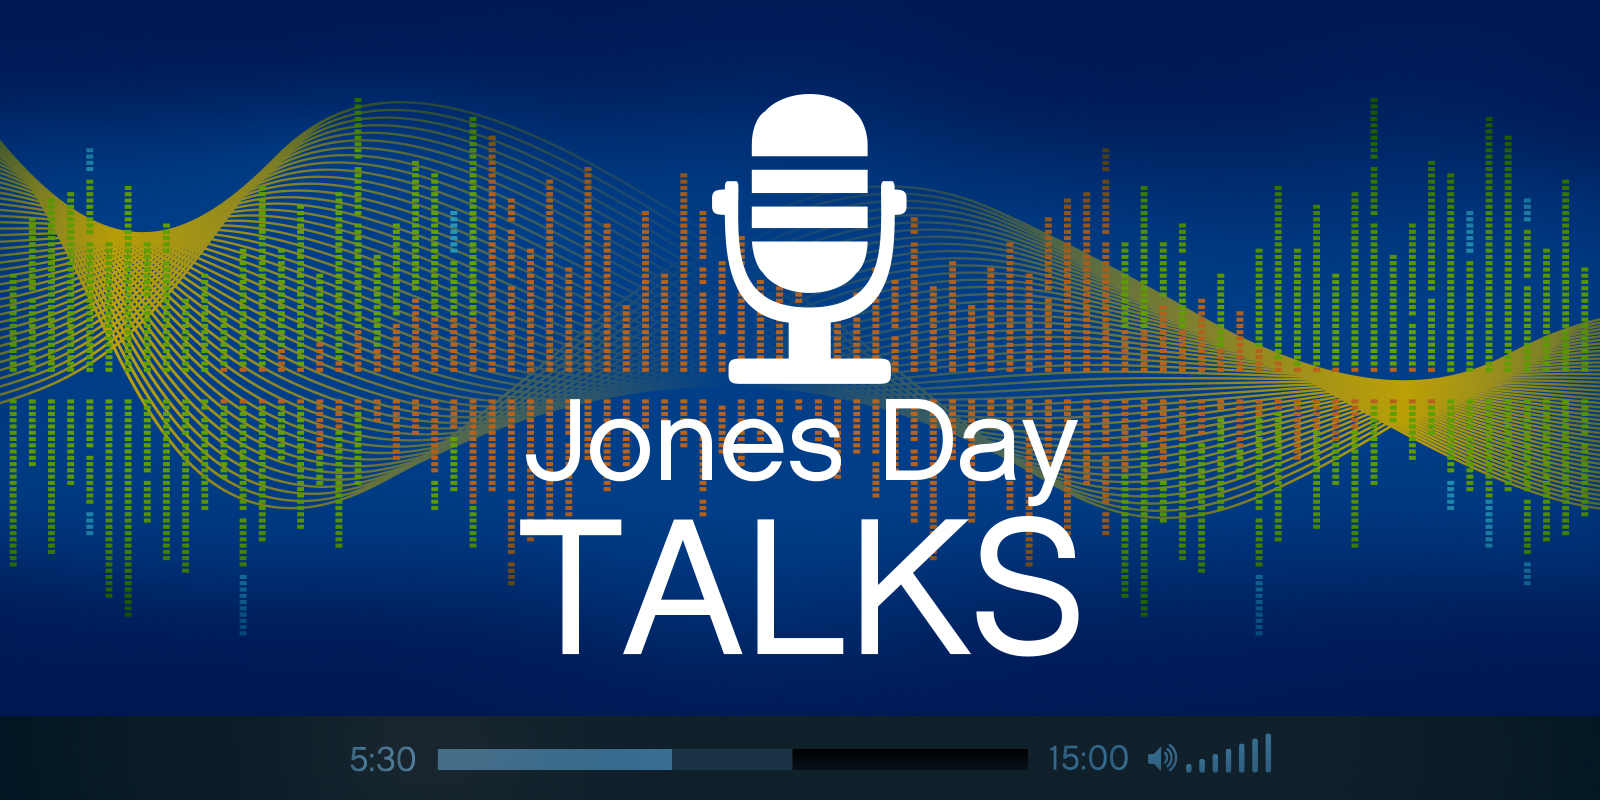 Jones Day Talks Health Care: Health Care Goes Digital